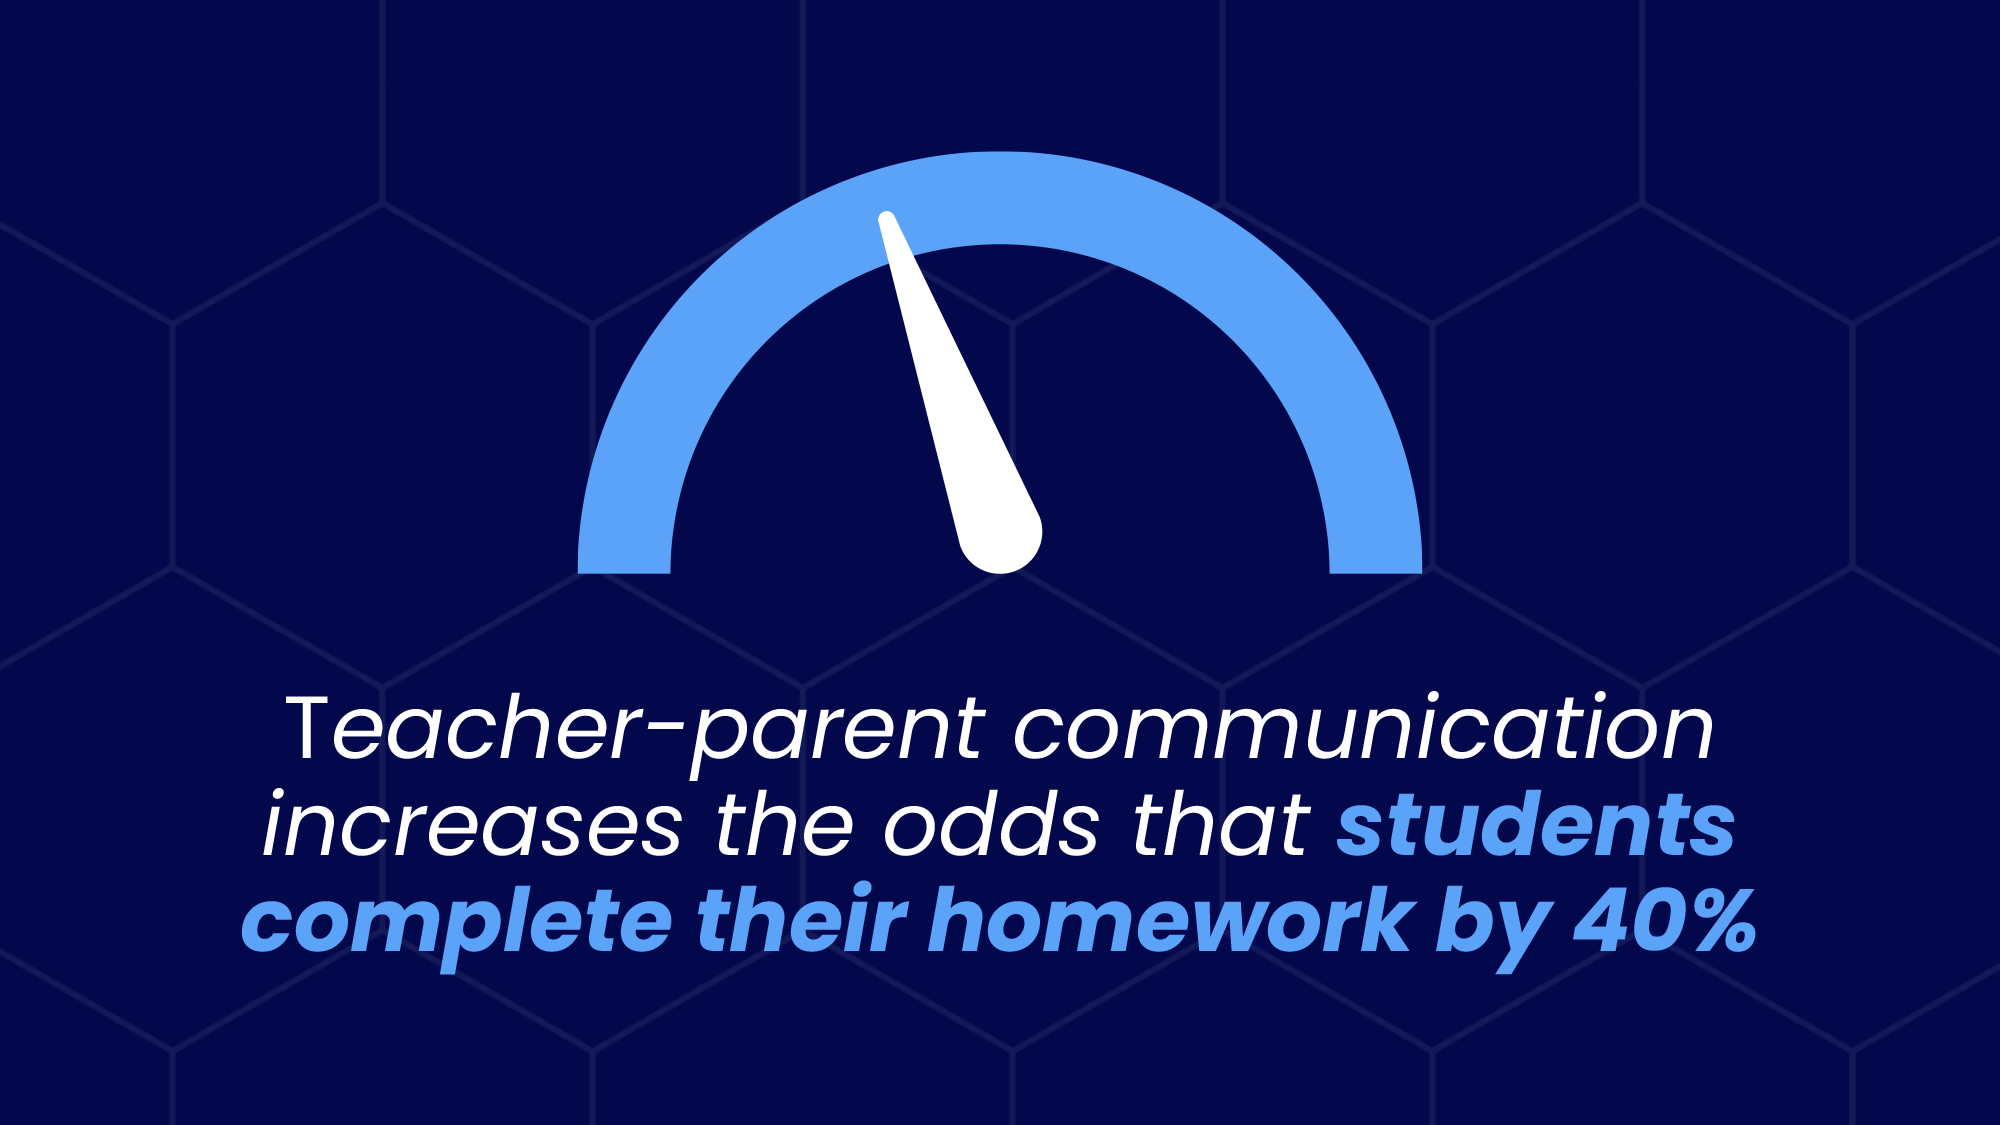 statistic for parent-teacher communication